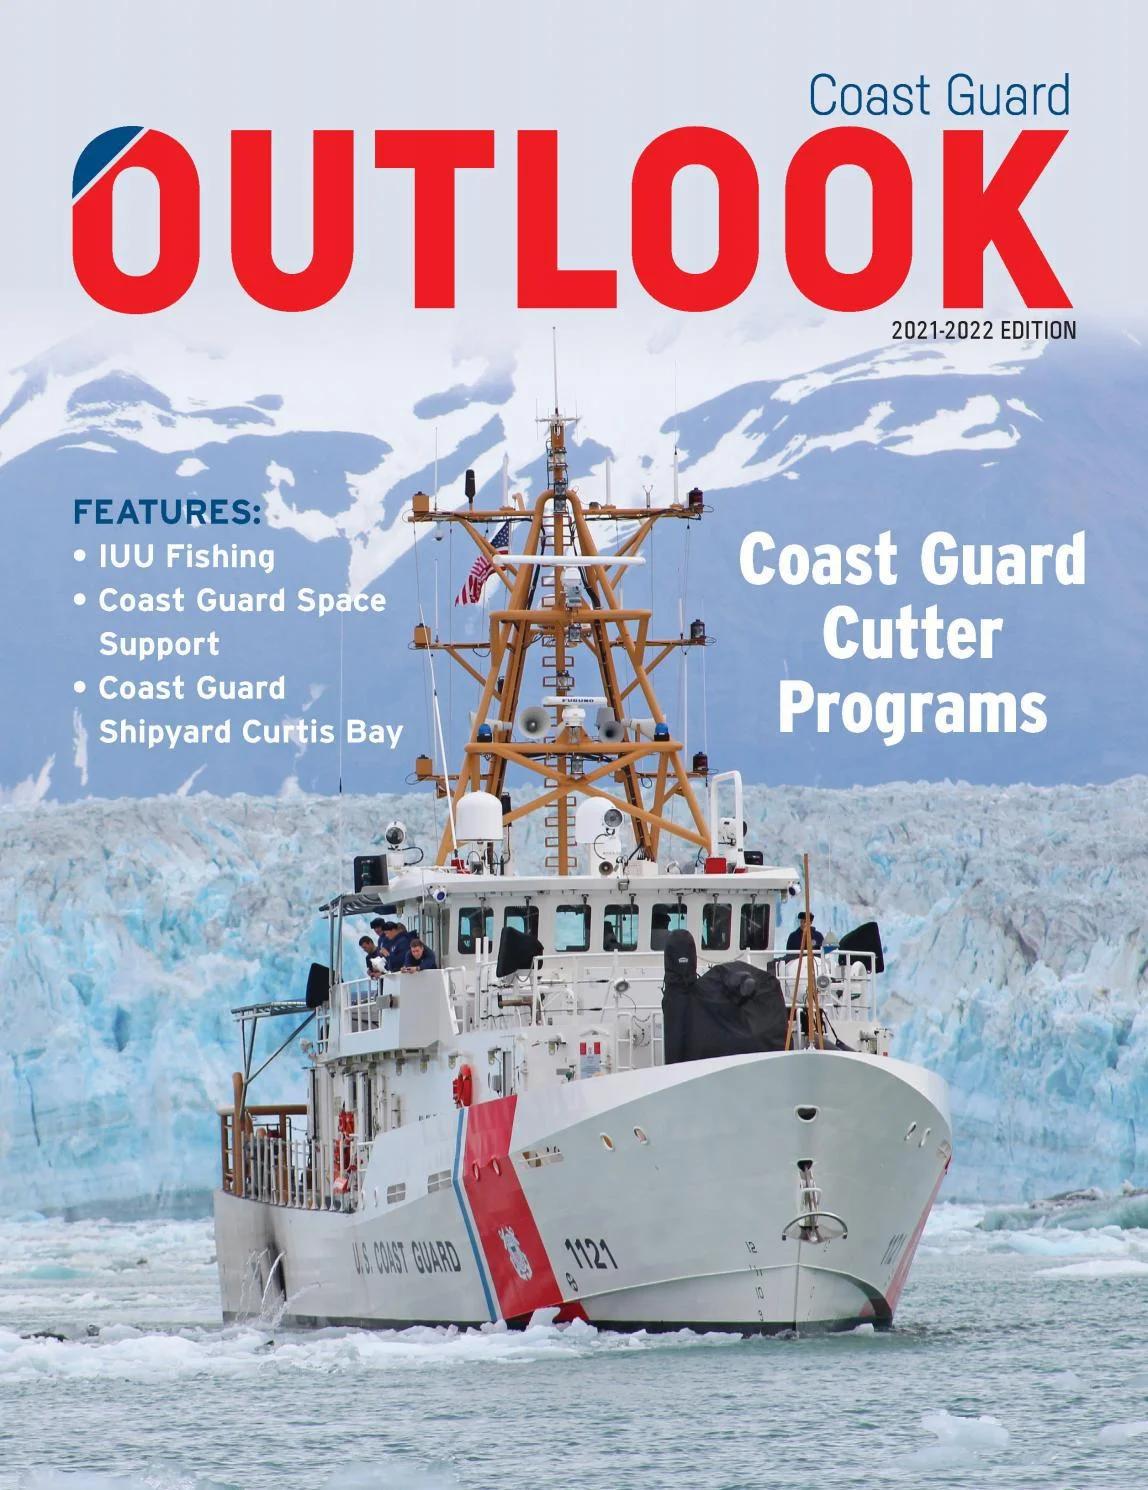 Remote Control Coast Guard Cutter: Advantages of Remote Control Cutter in Coast Guard Operations